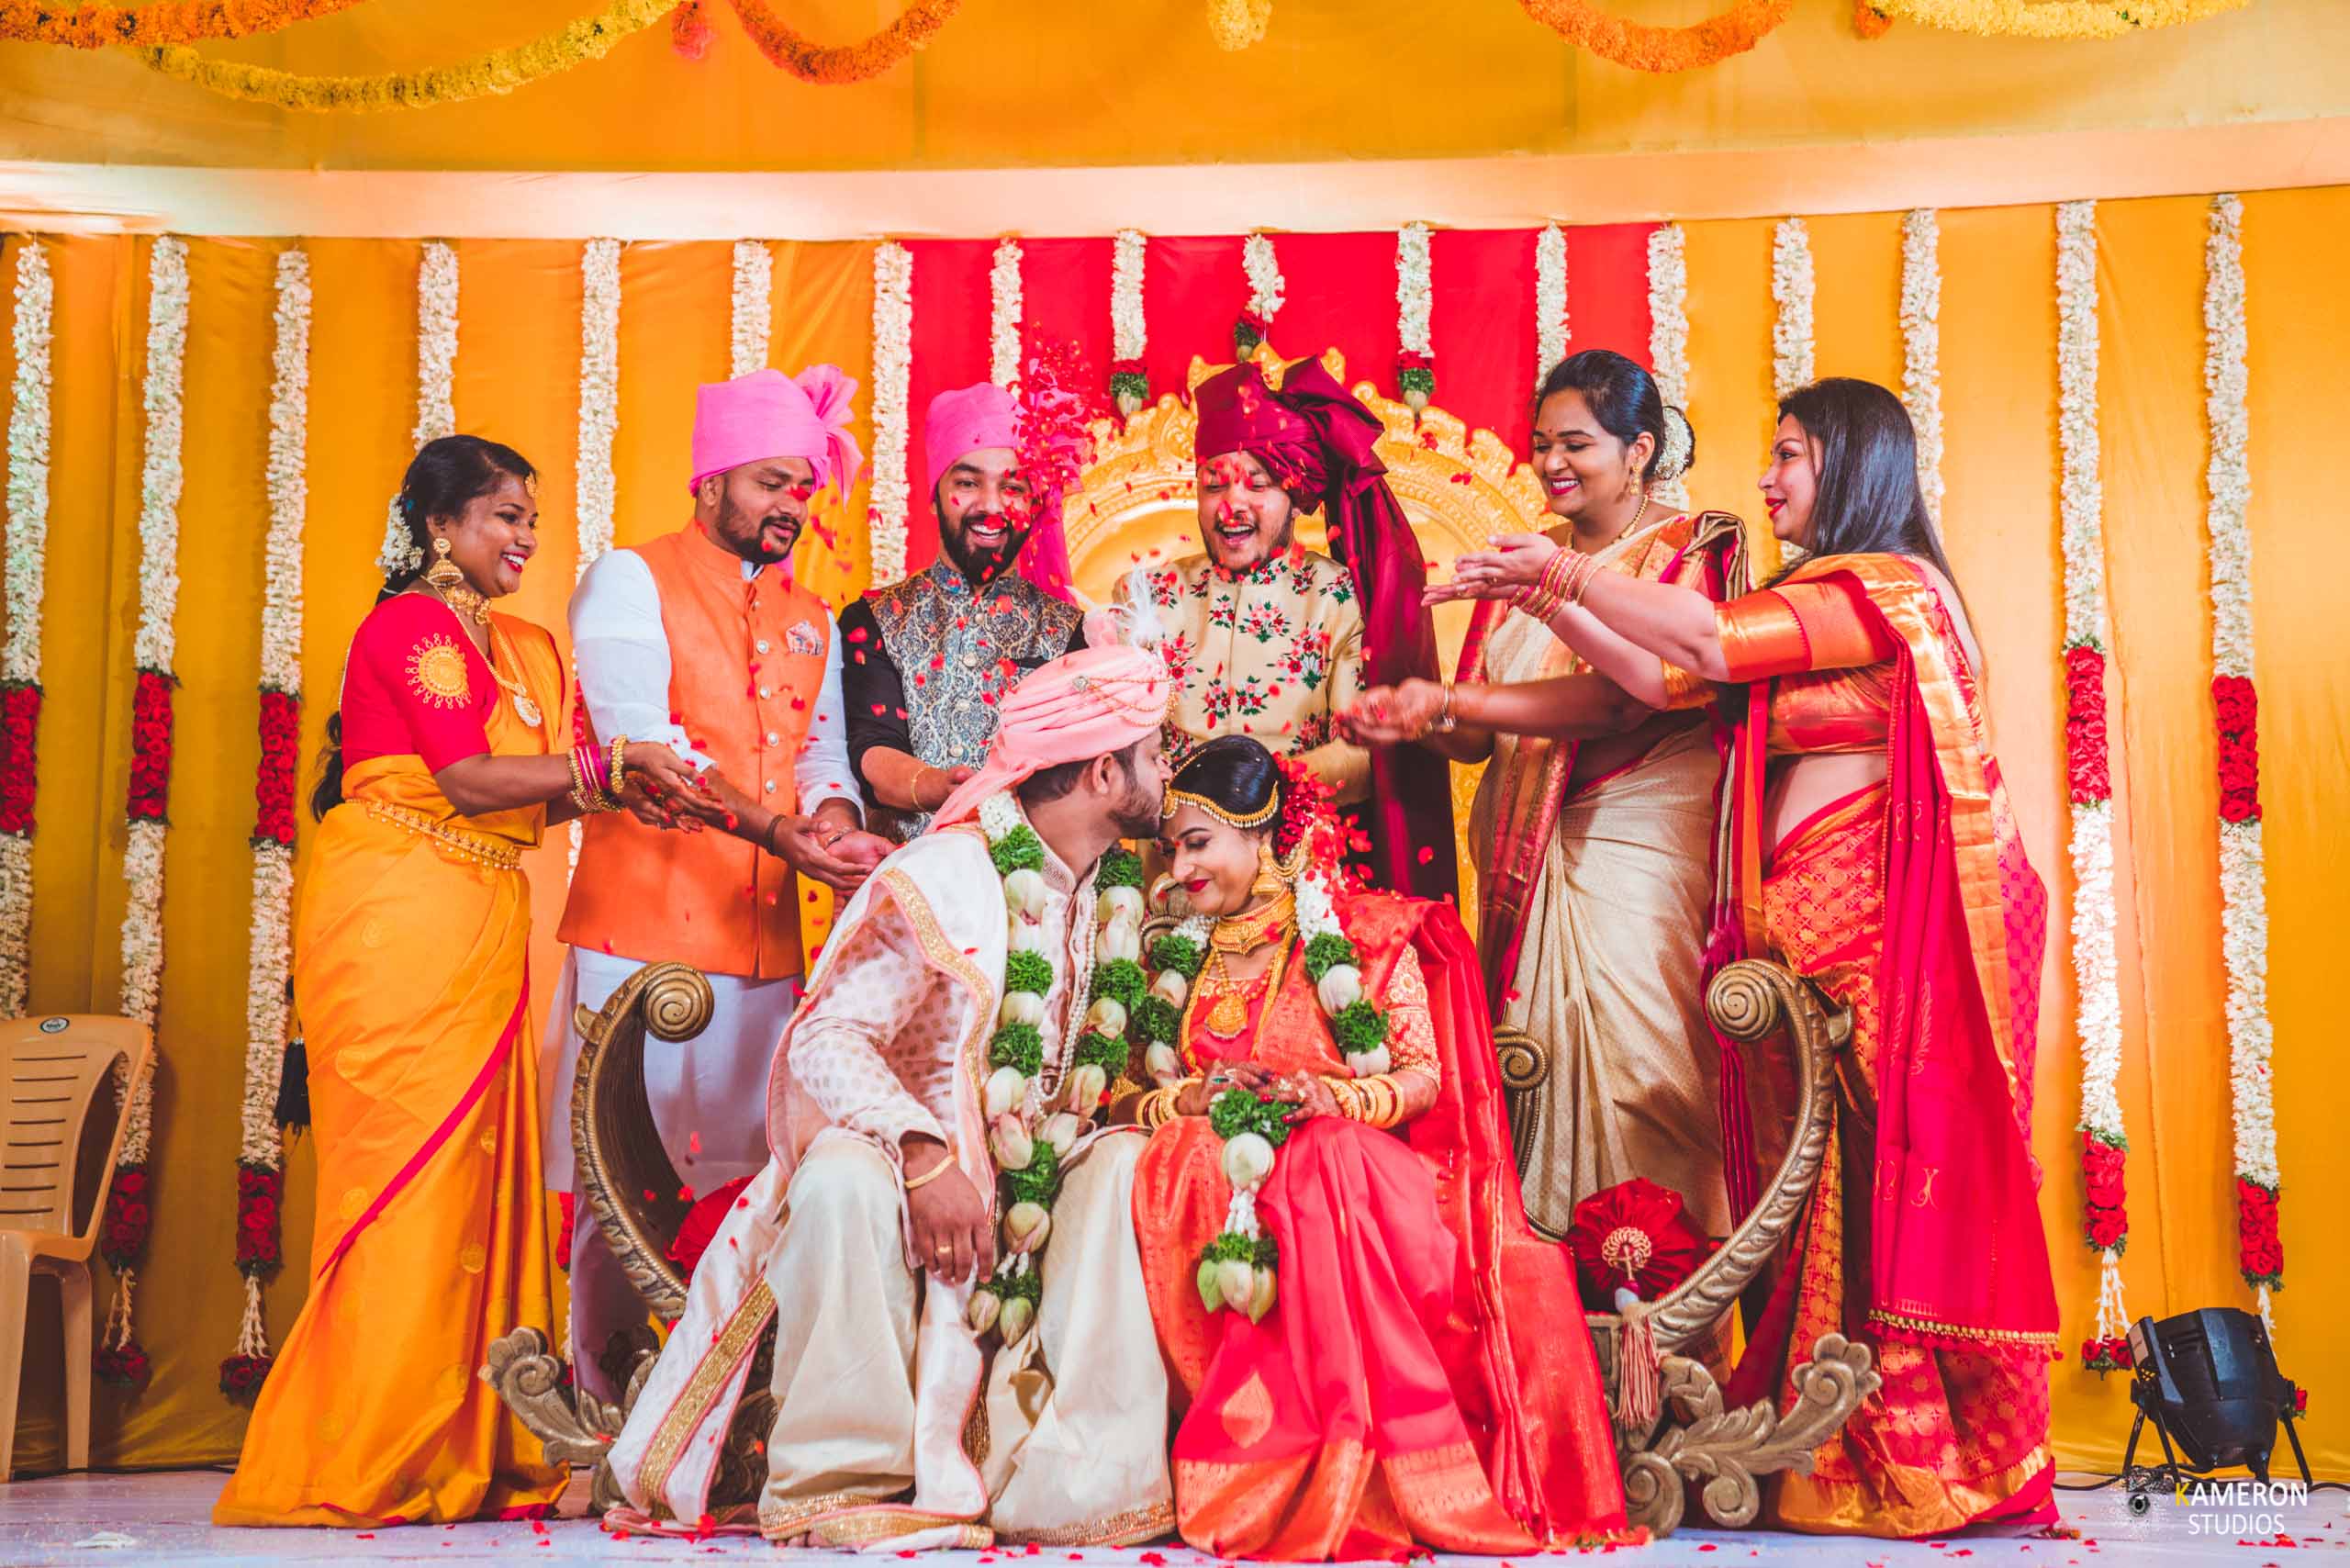 South-India-Wedding-of-Sindhu-and-Avit-in-Manglore-by-Kameron-Studios-134.jpg